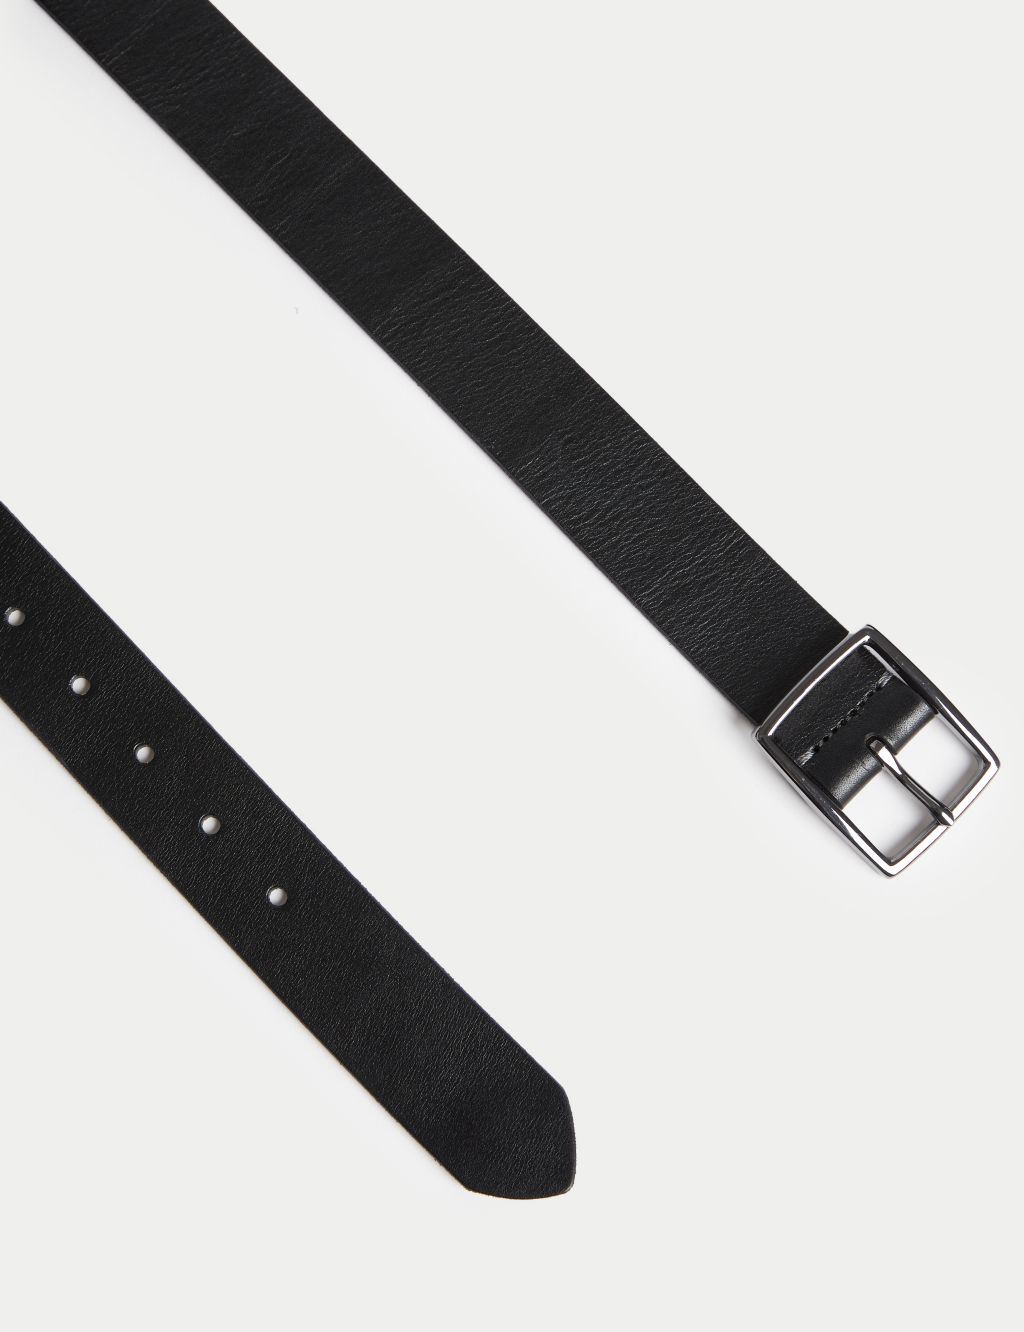 Leather Rectangular Buckle Smart Belt image 2